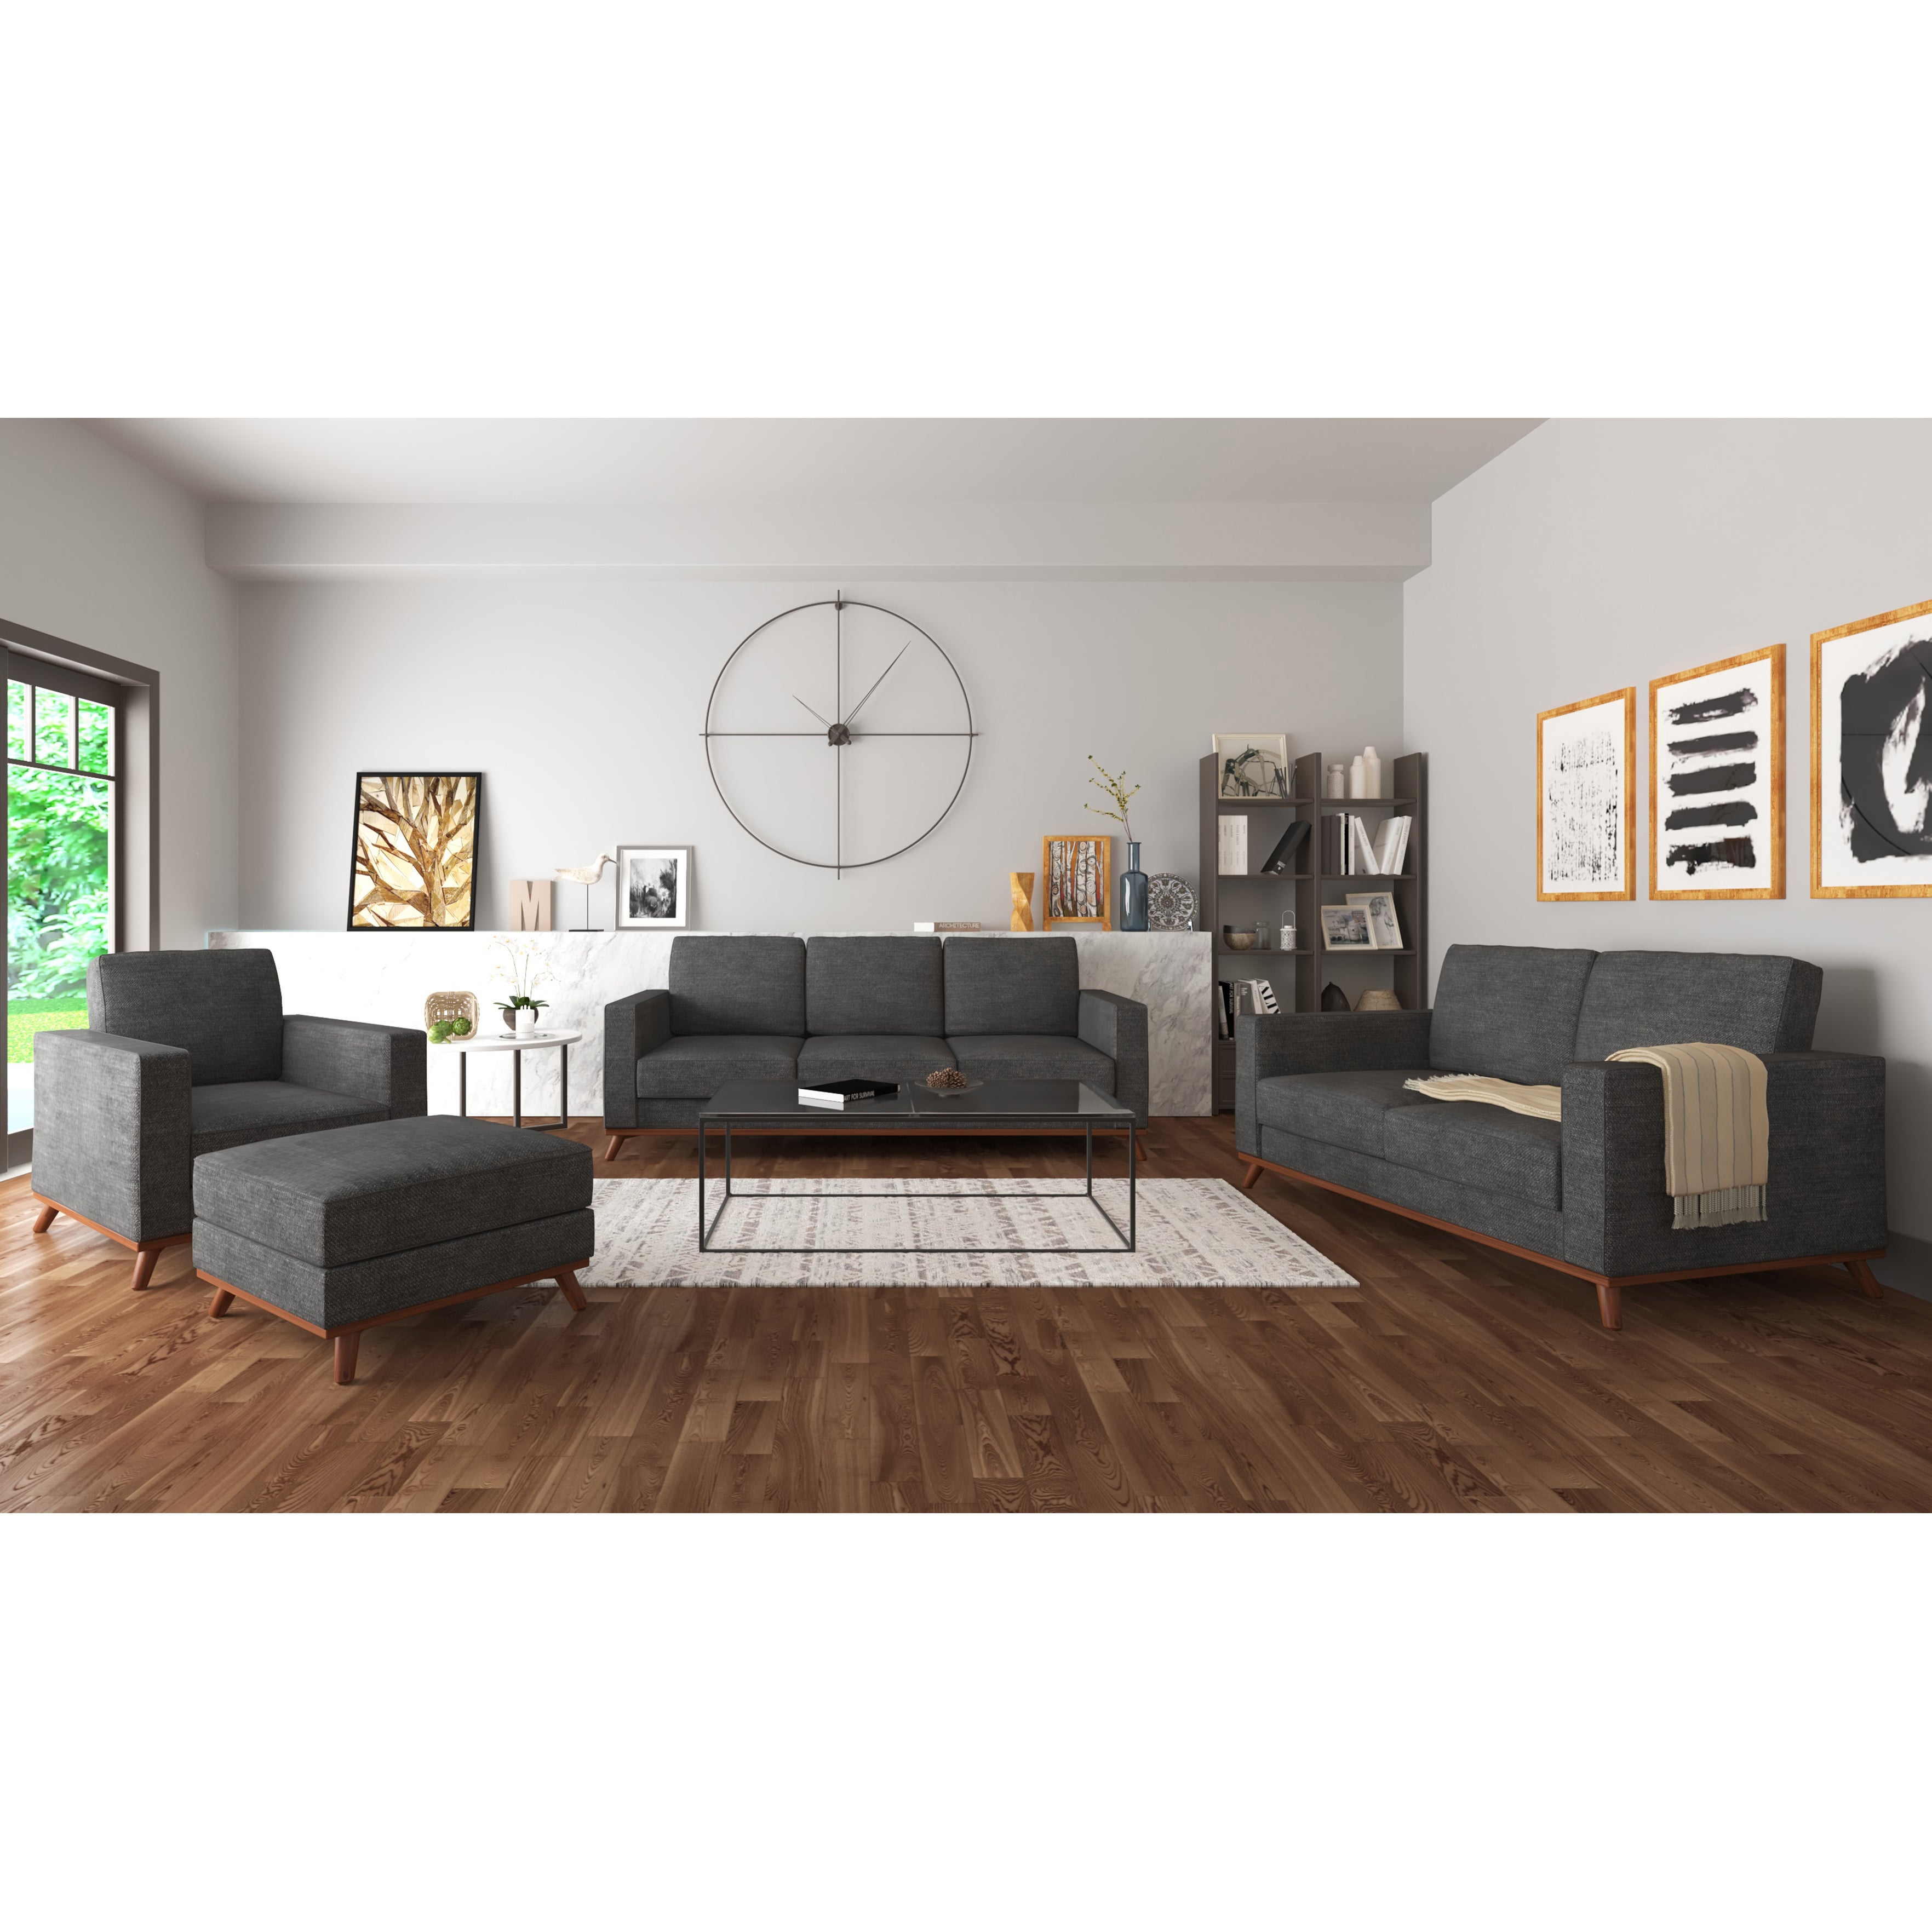 Archer Sofa, Loveseat, Chair and Ottoman living room set - SunHaven Home